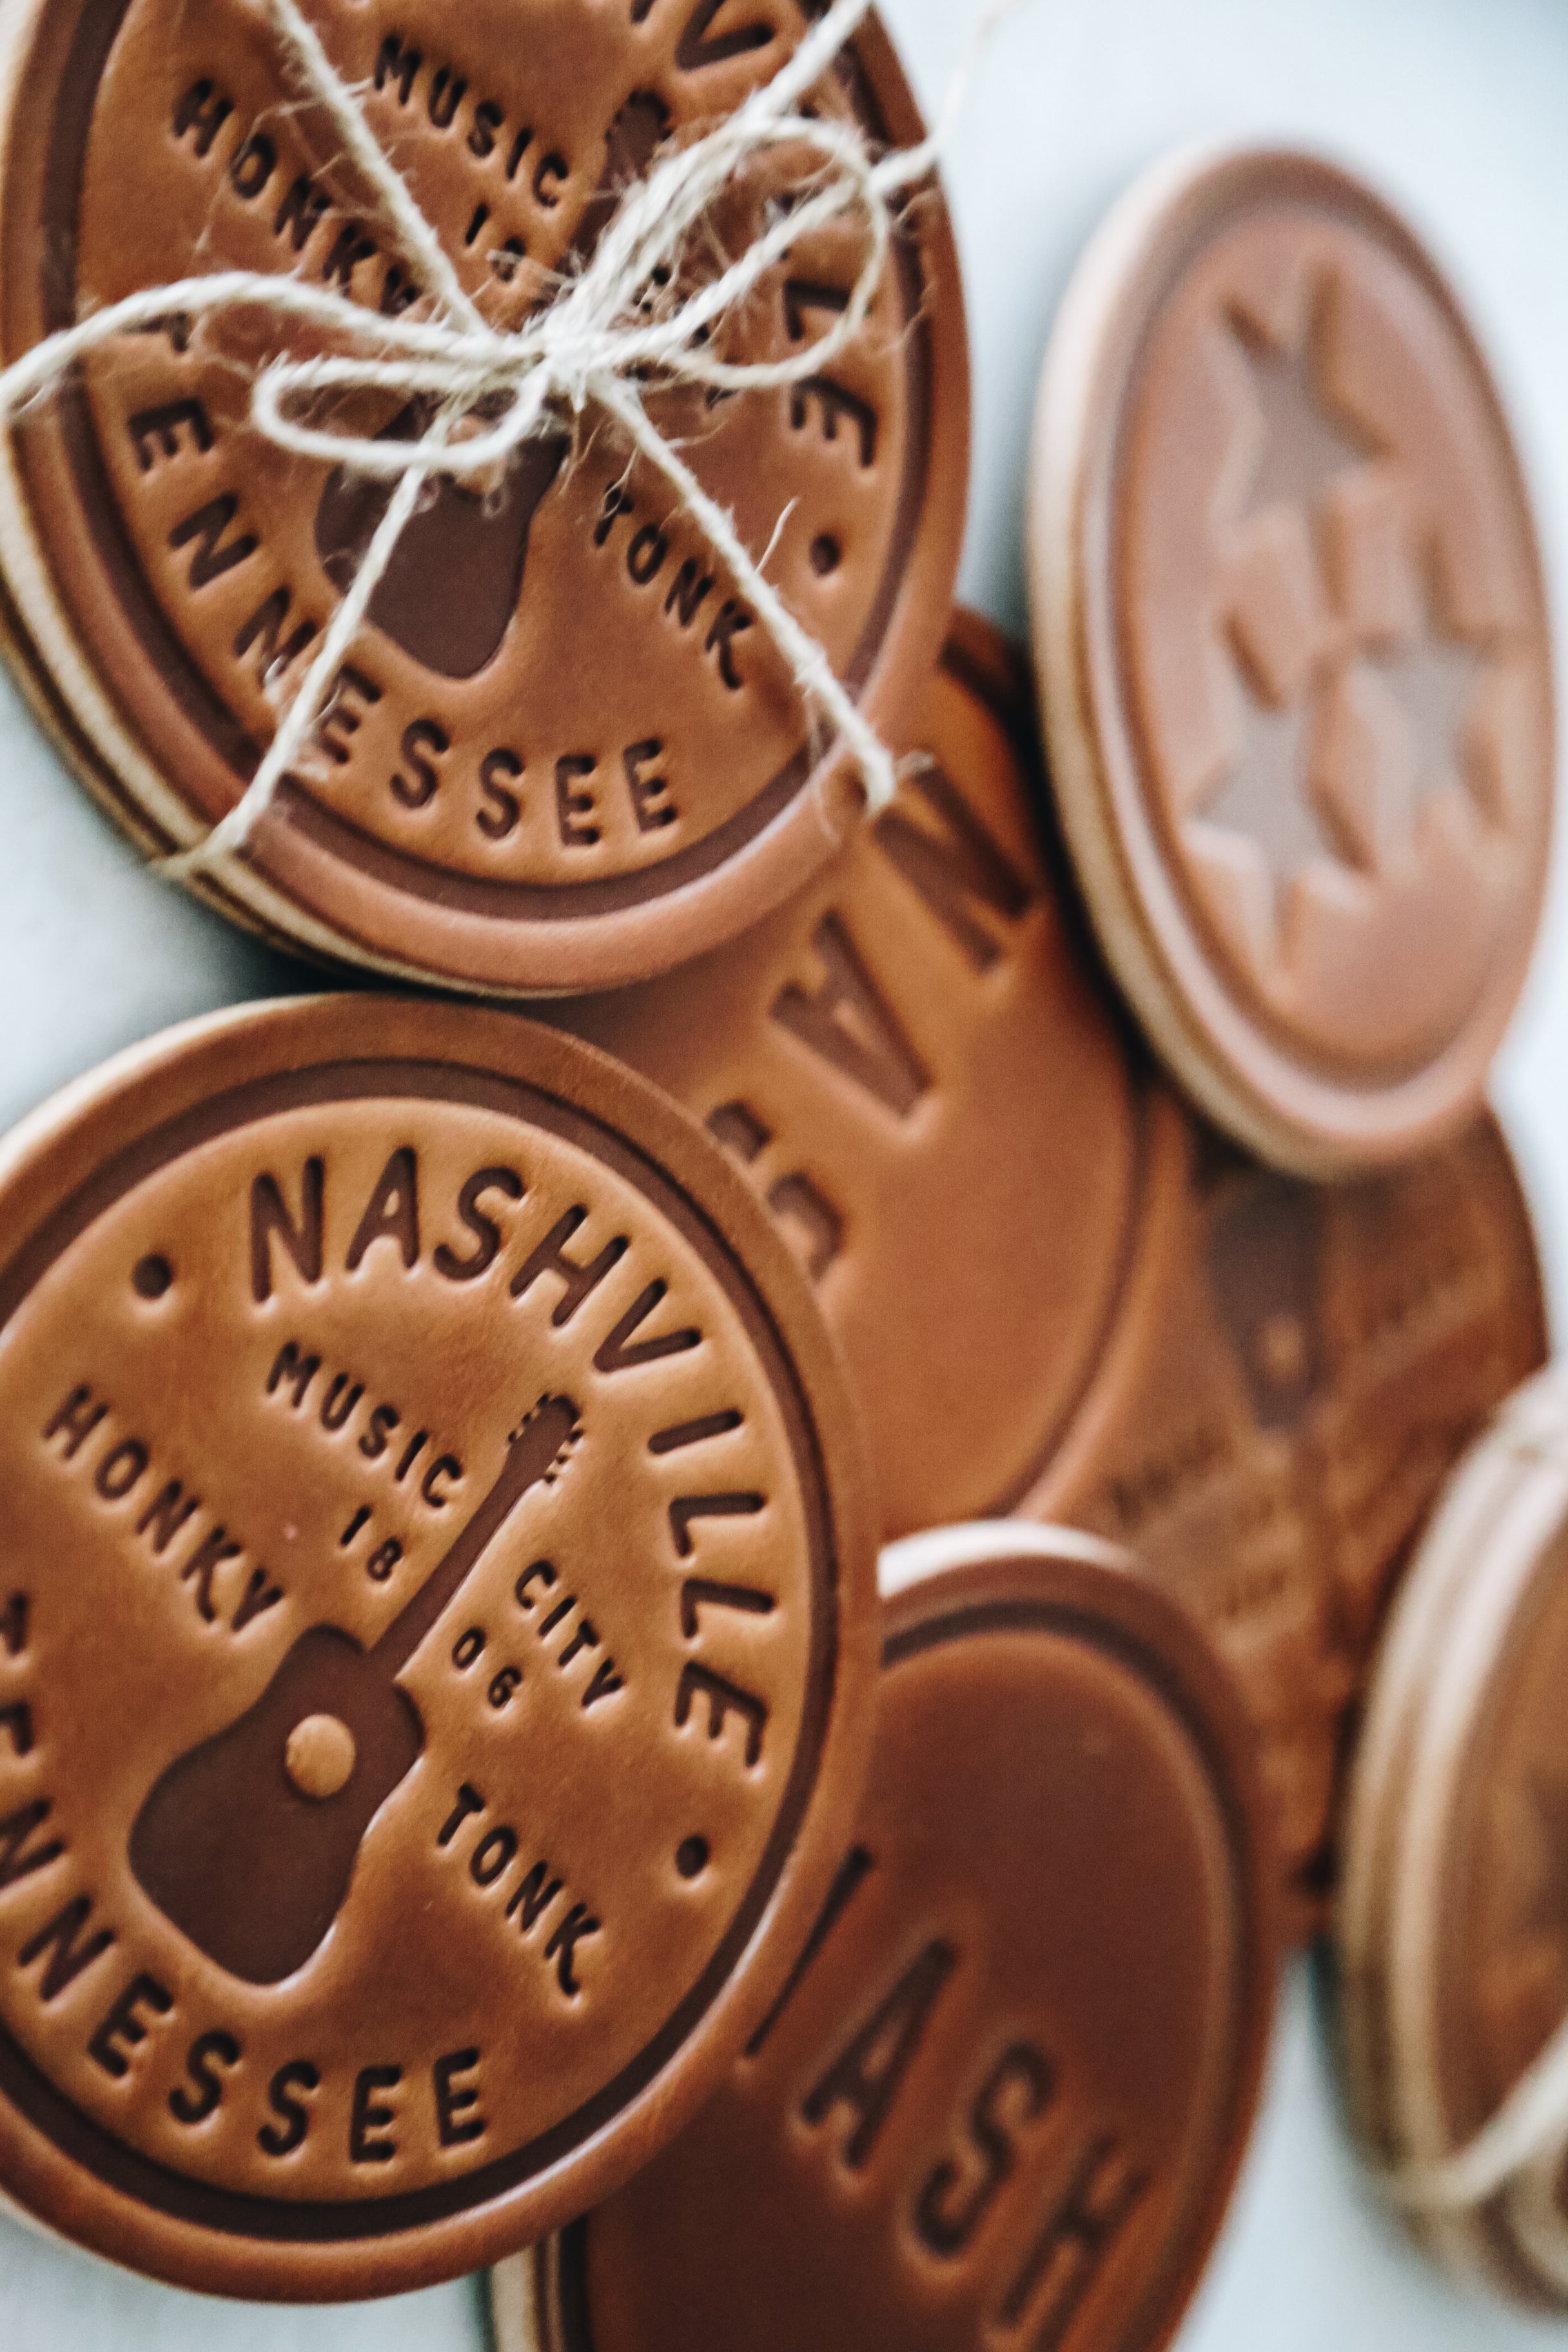 NASHVILLE Tennessee Leather Coasters [Set Of 2]